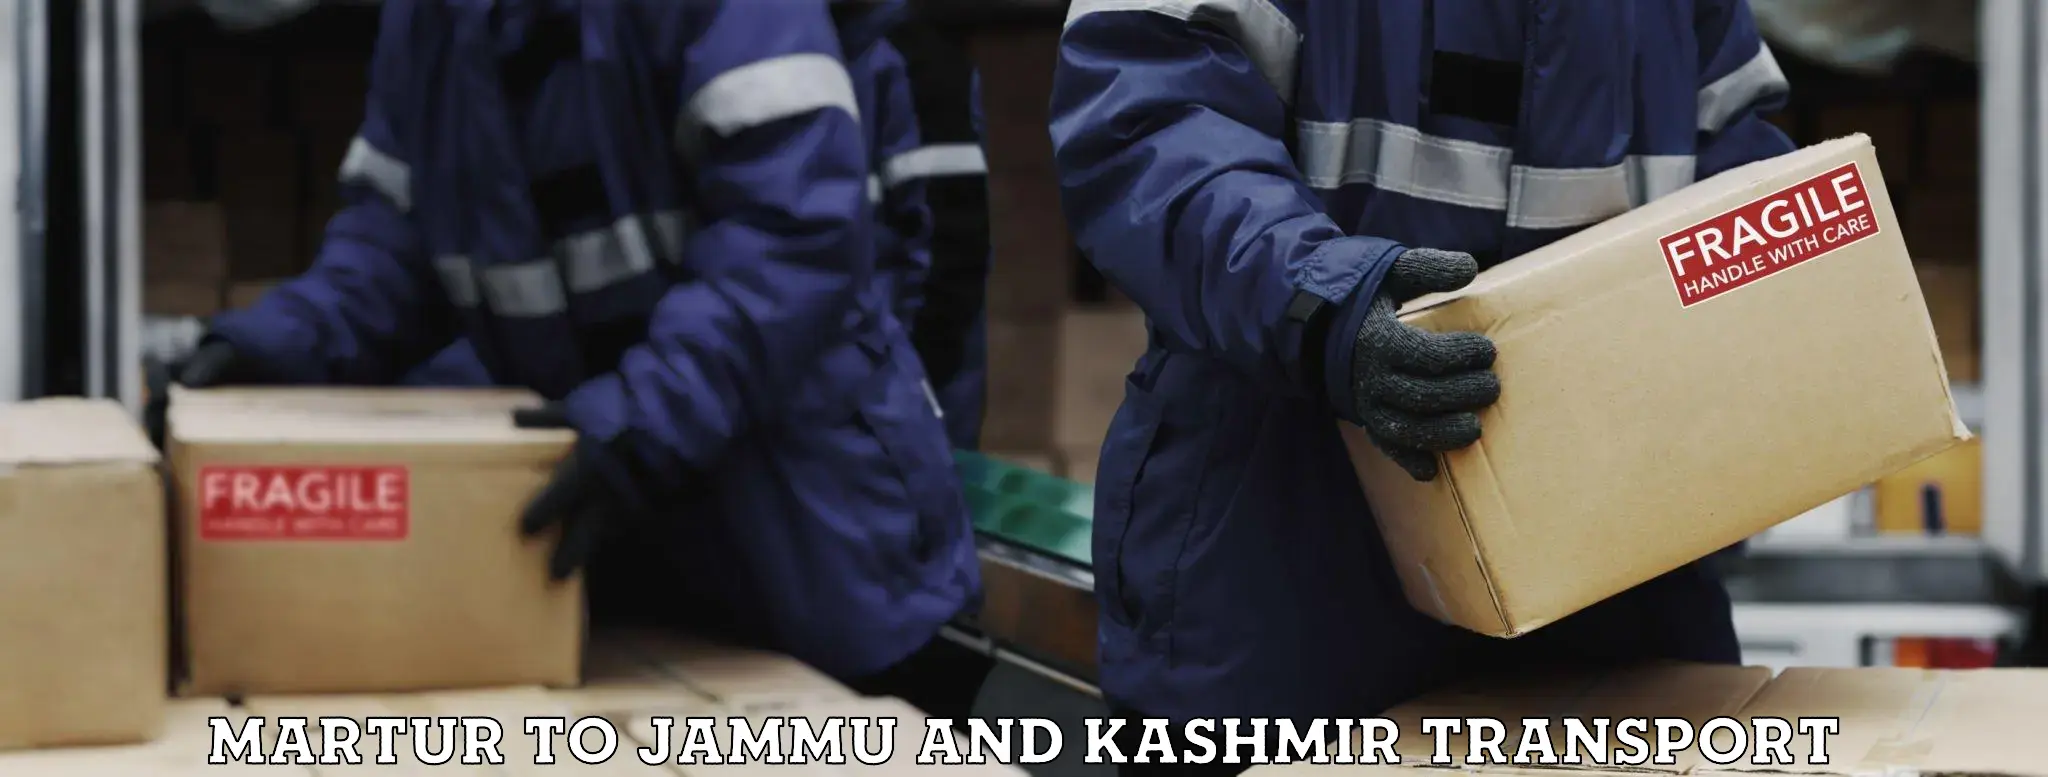 Interstate goods transport Martur to Jammu and Kashmir